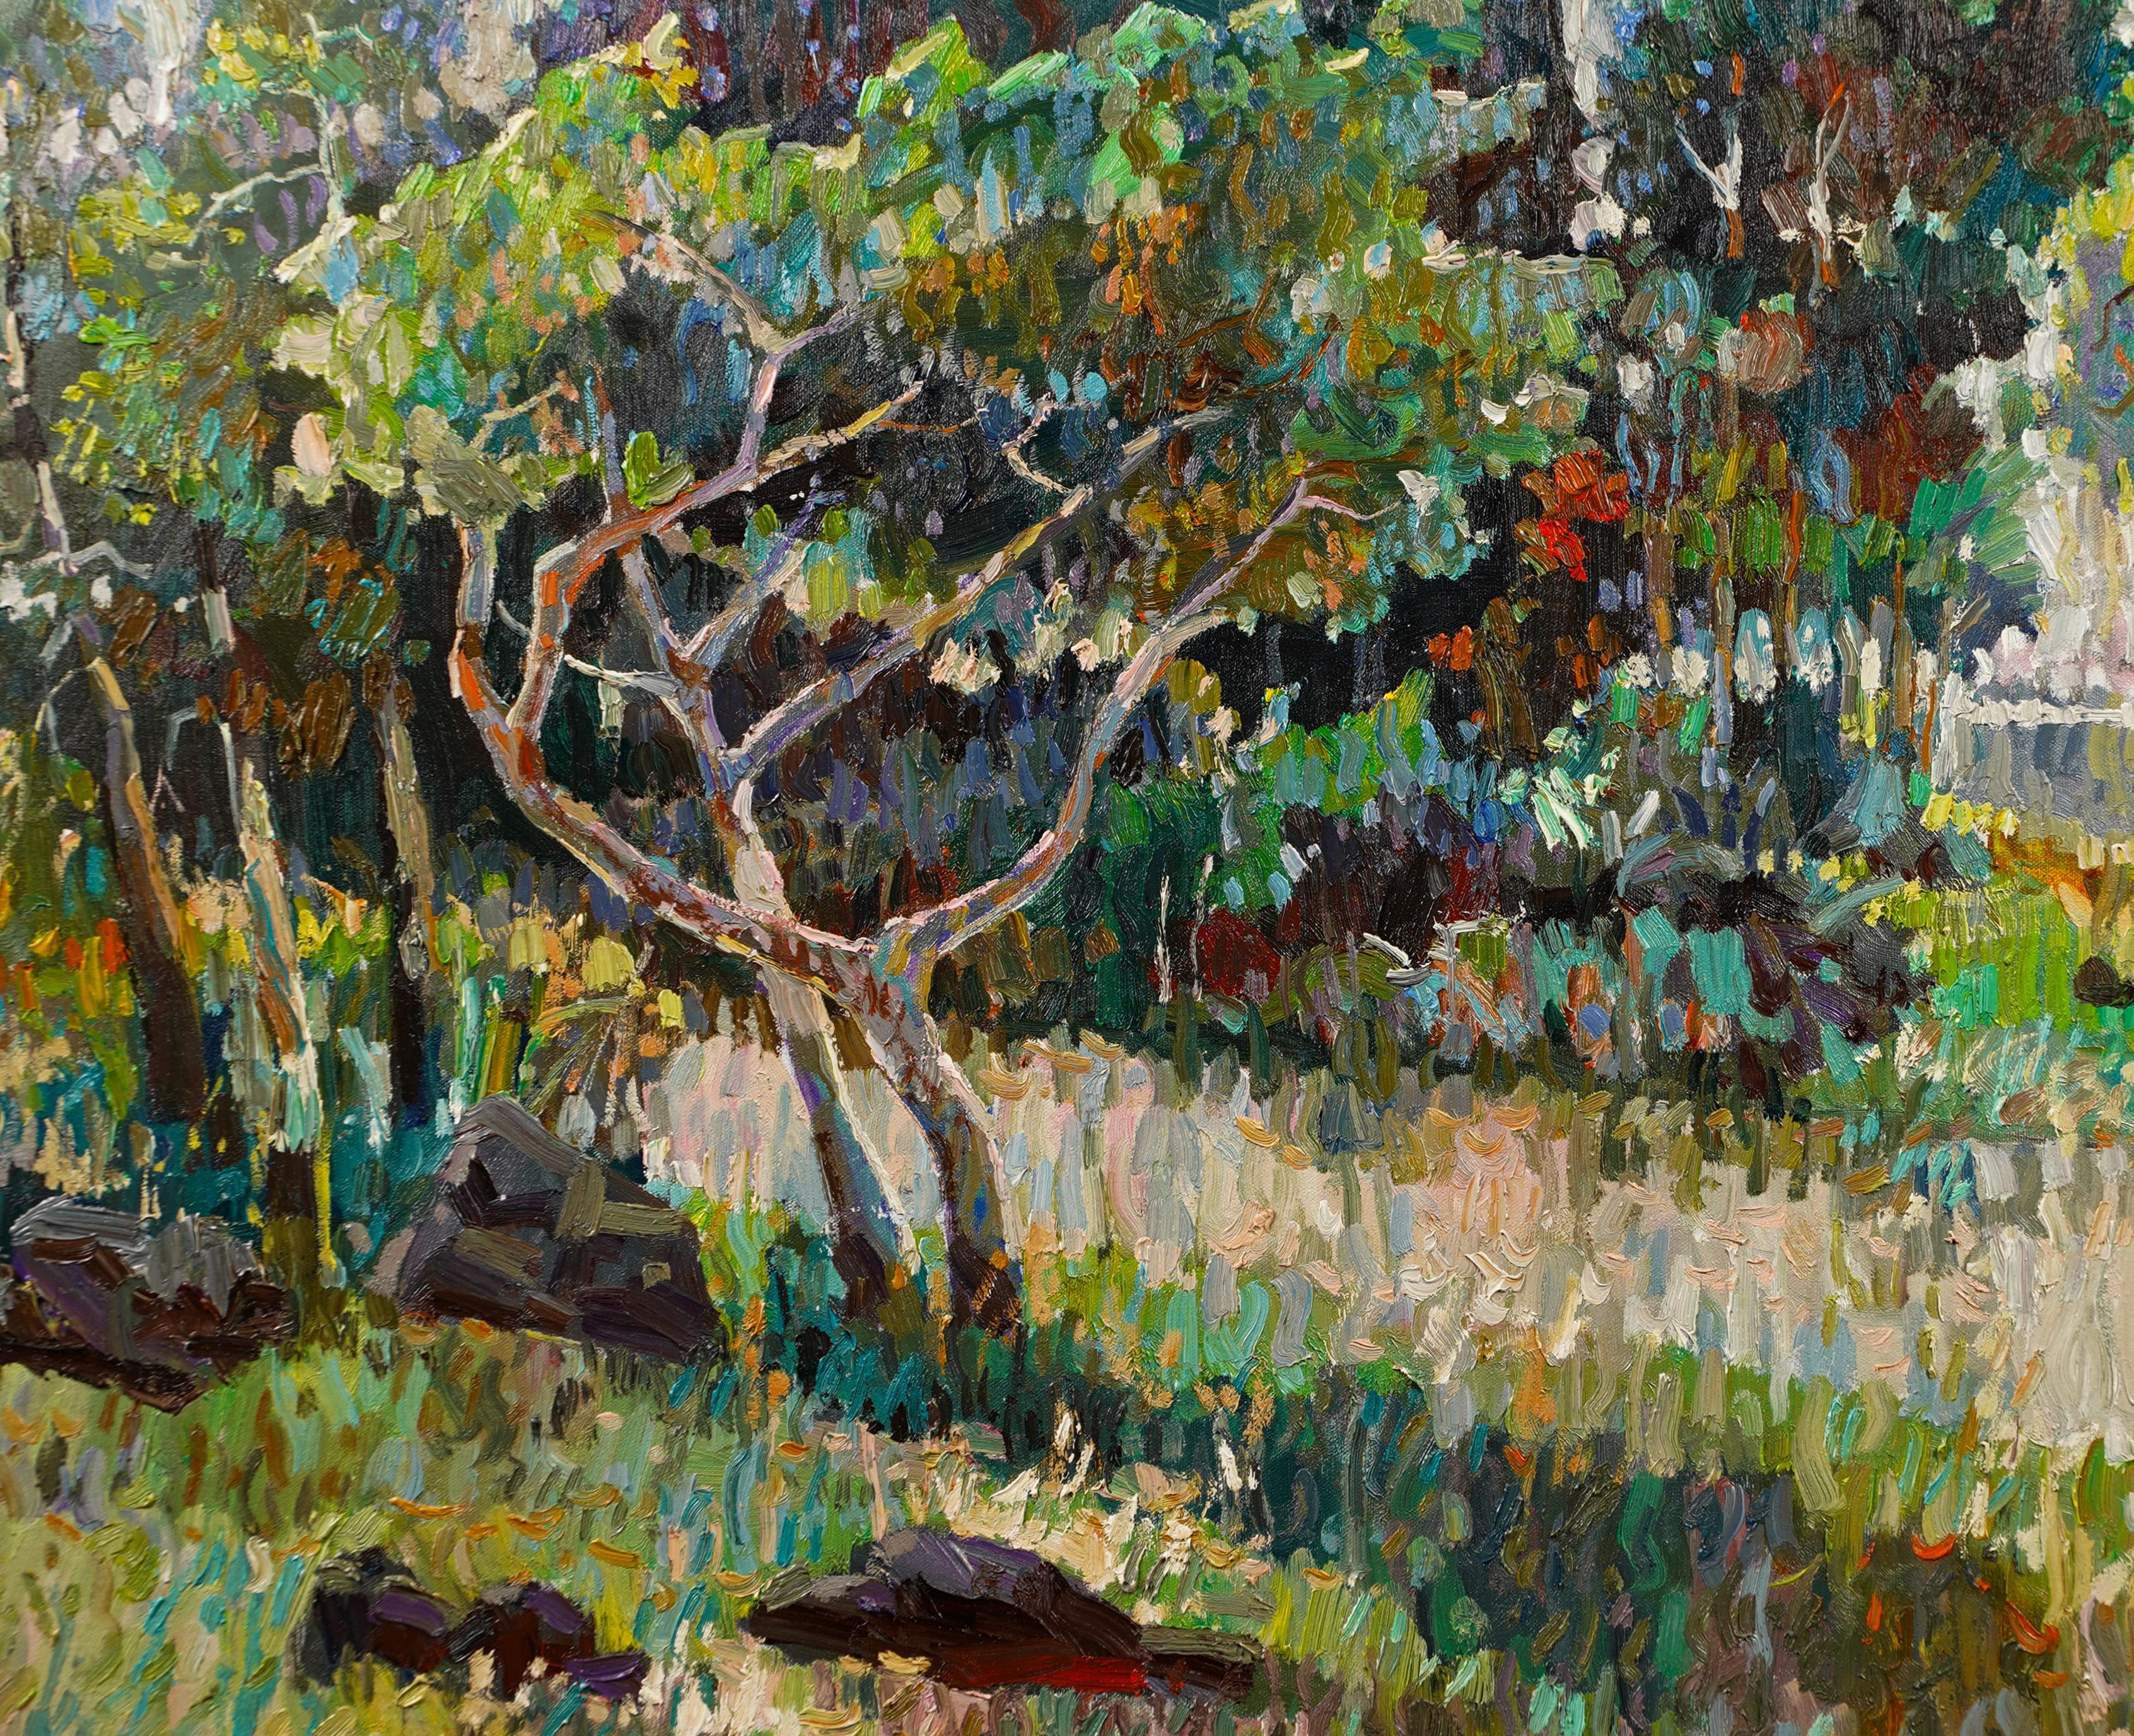 Antique American impressionist landscape oil painting.  Oil on canvas.  Signed.  Framed.  Image size, 40L x 30H.